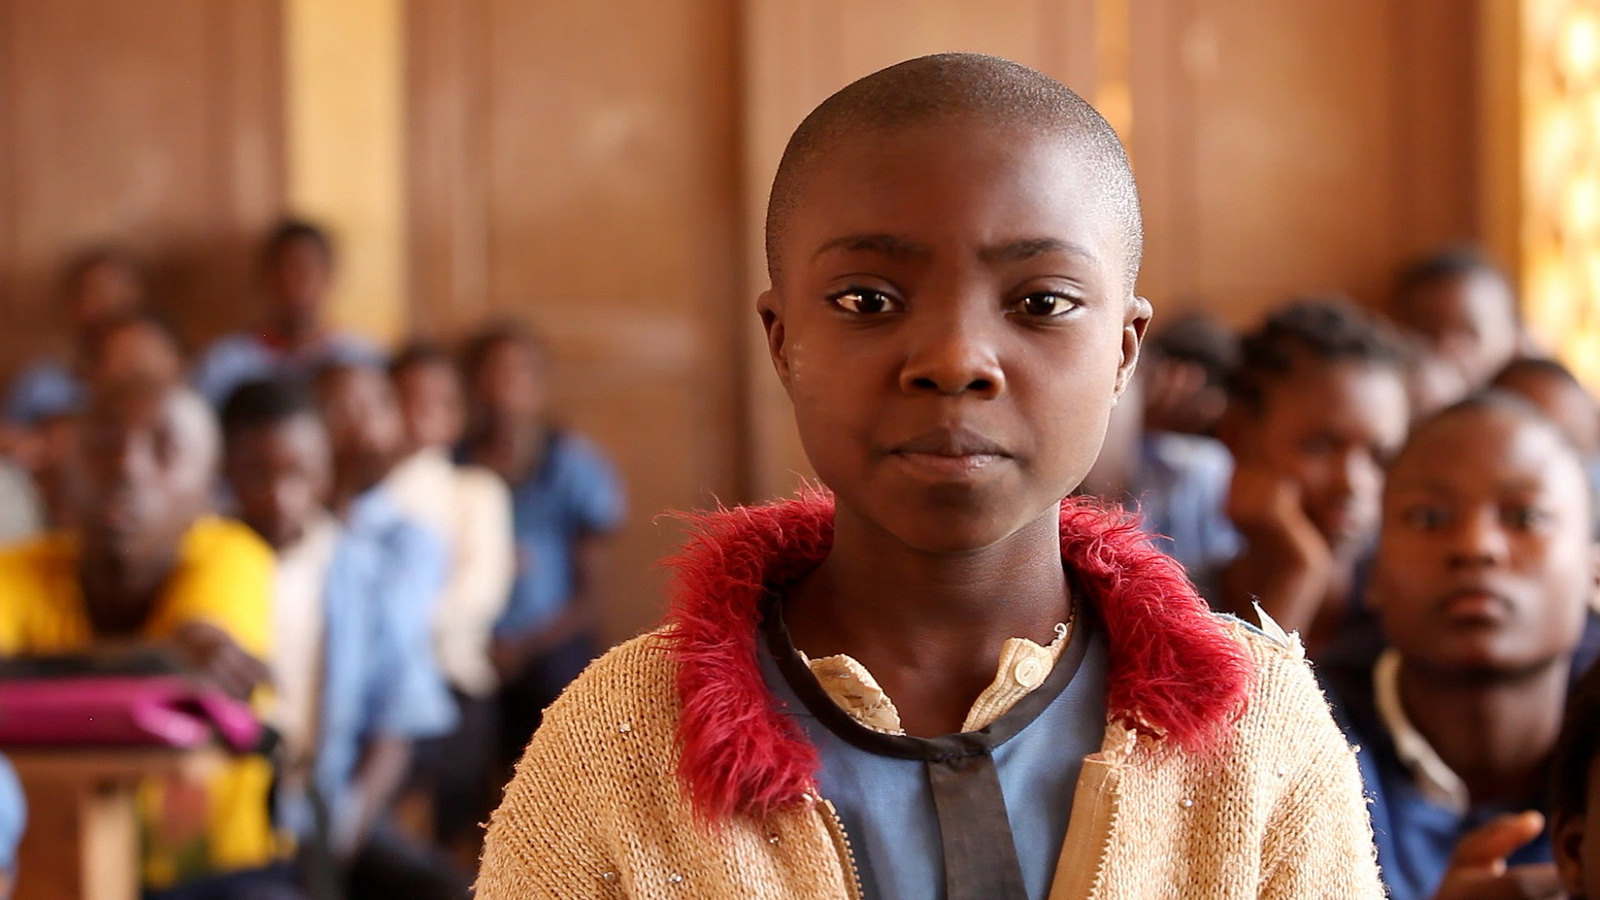 Primary School Student In Cameroon Gpestephan Bachenheimer